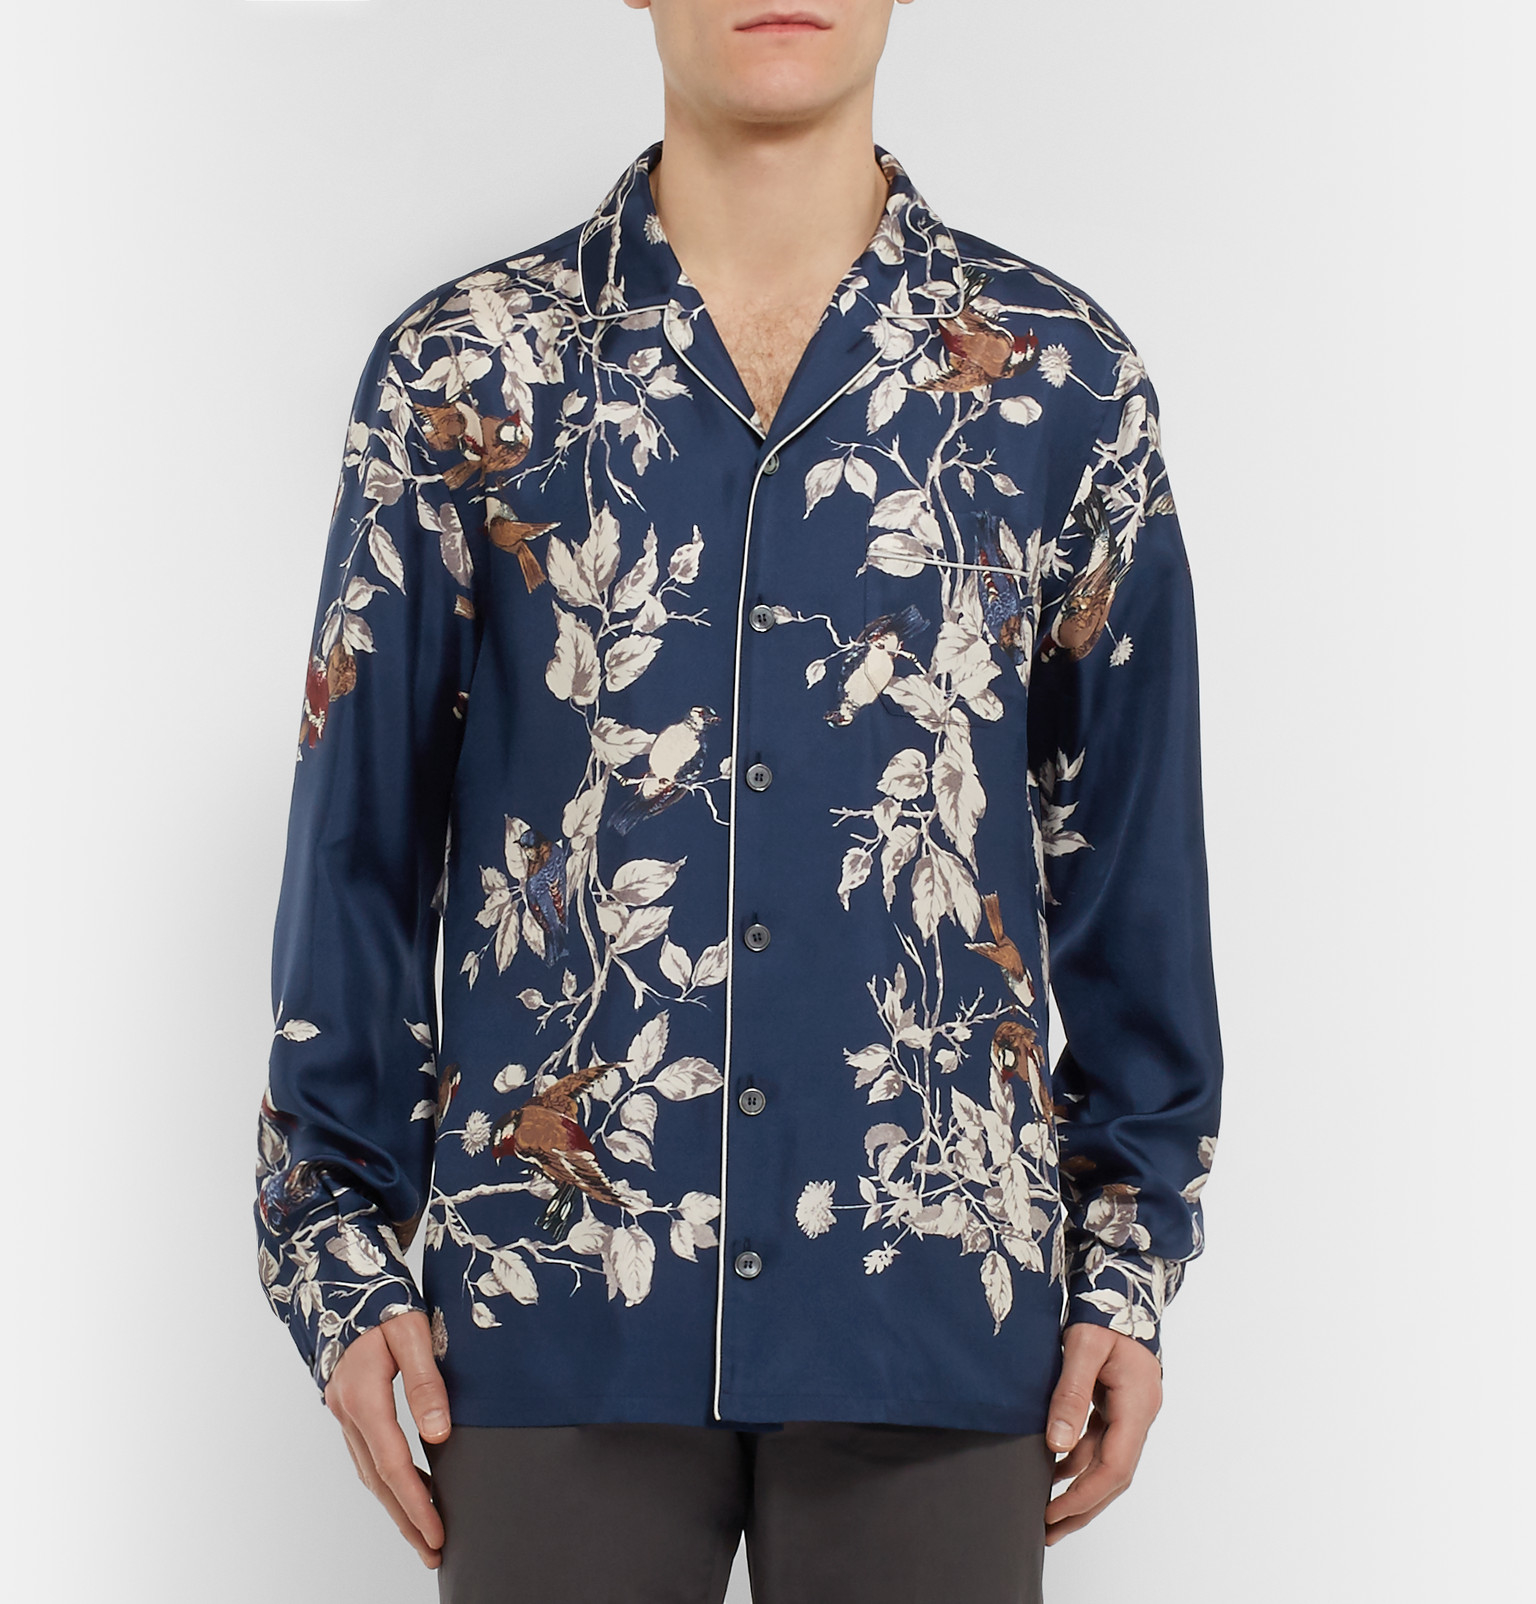 Dolce & Gabbana Camp-collar Printed Silk Shirt in Blue for Men - Lyst